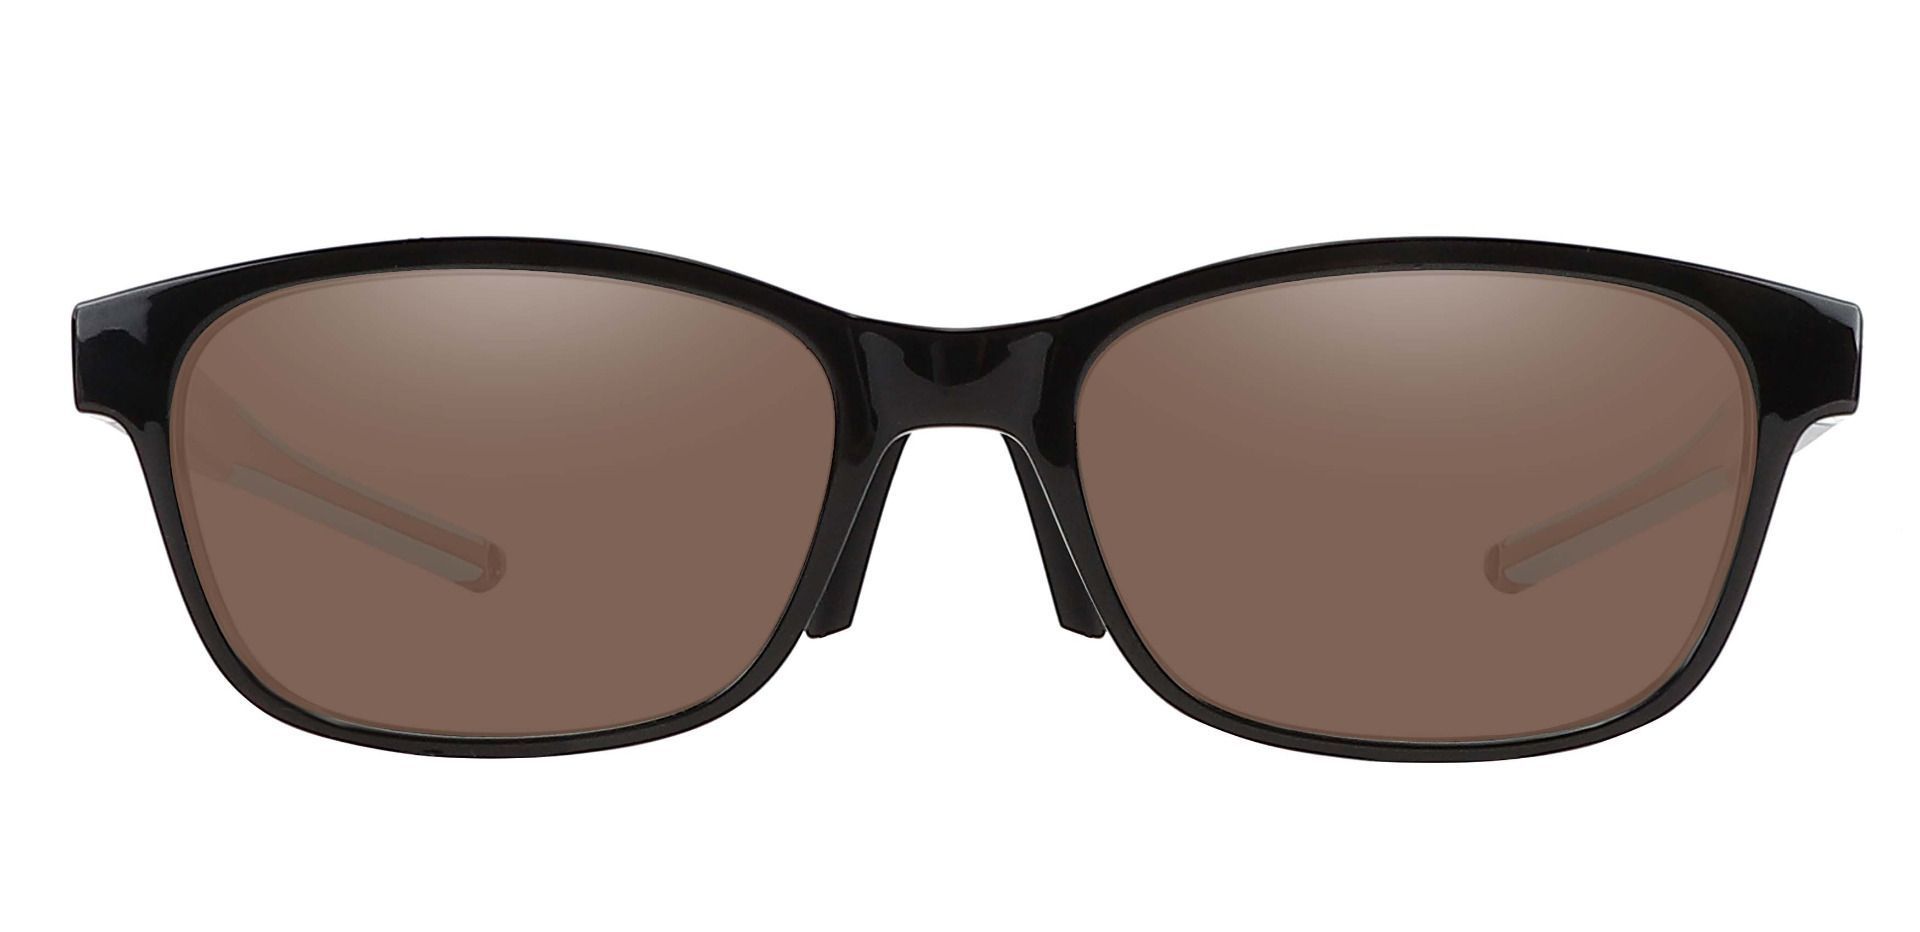 Higgins Rectangle Lined Bifocal Sunglasses - Black Frame With Brown Lenses